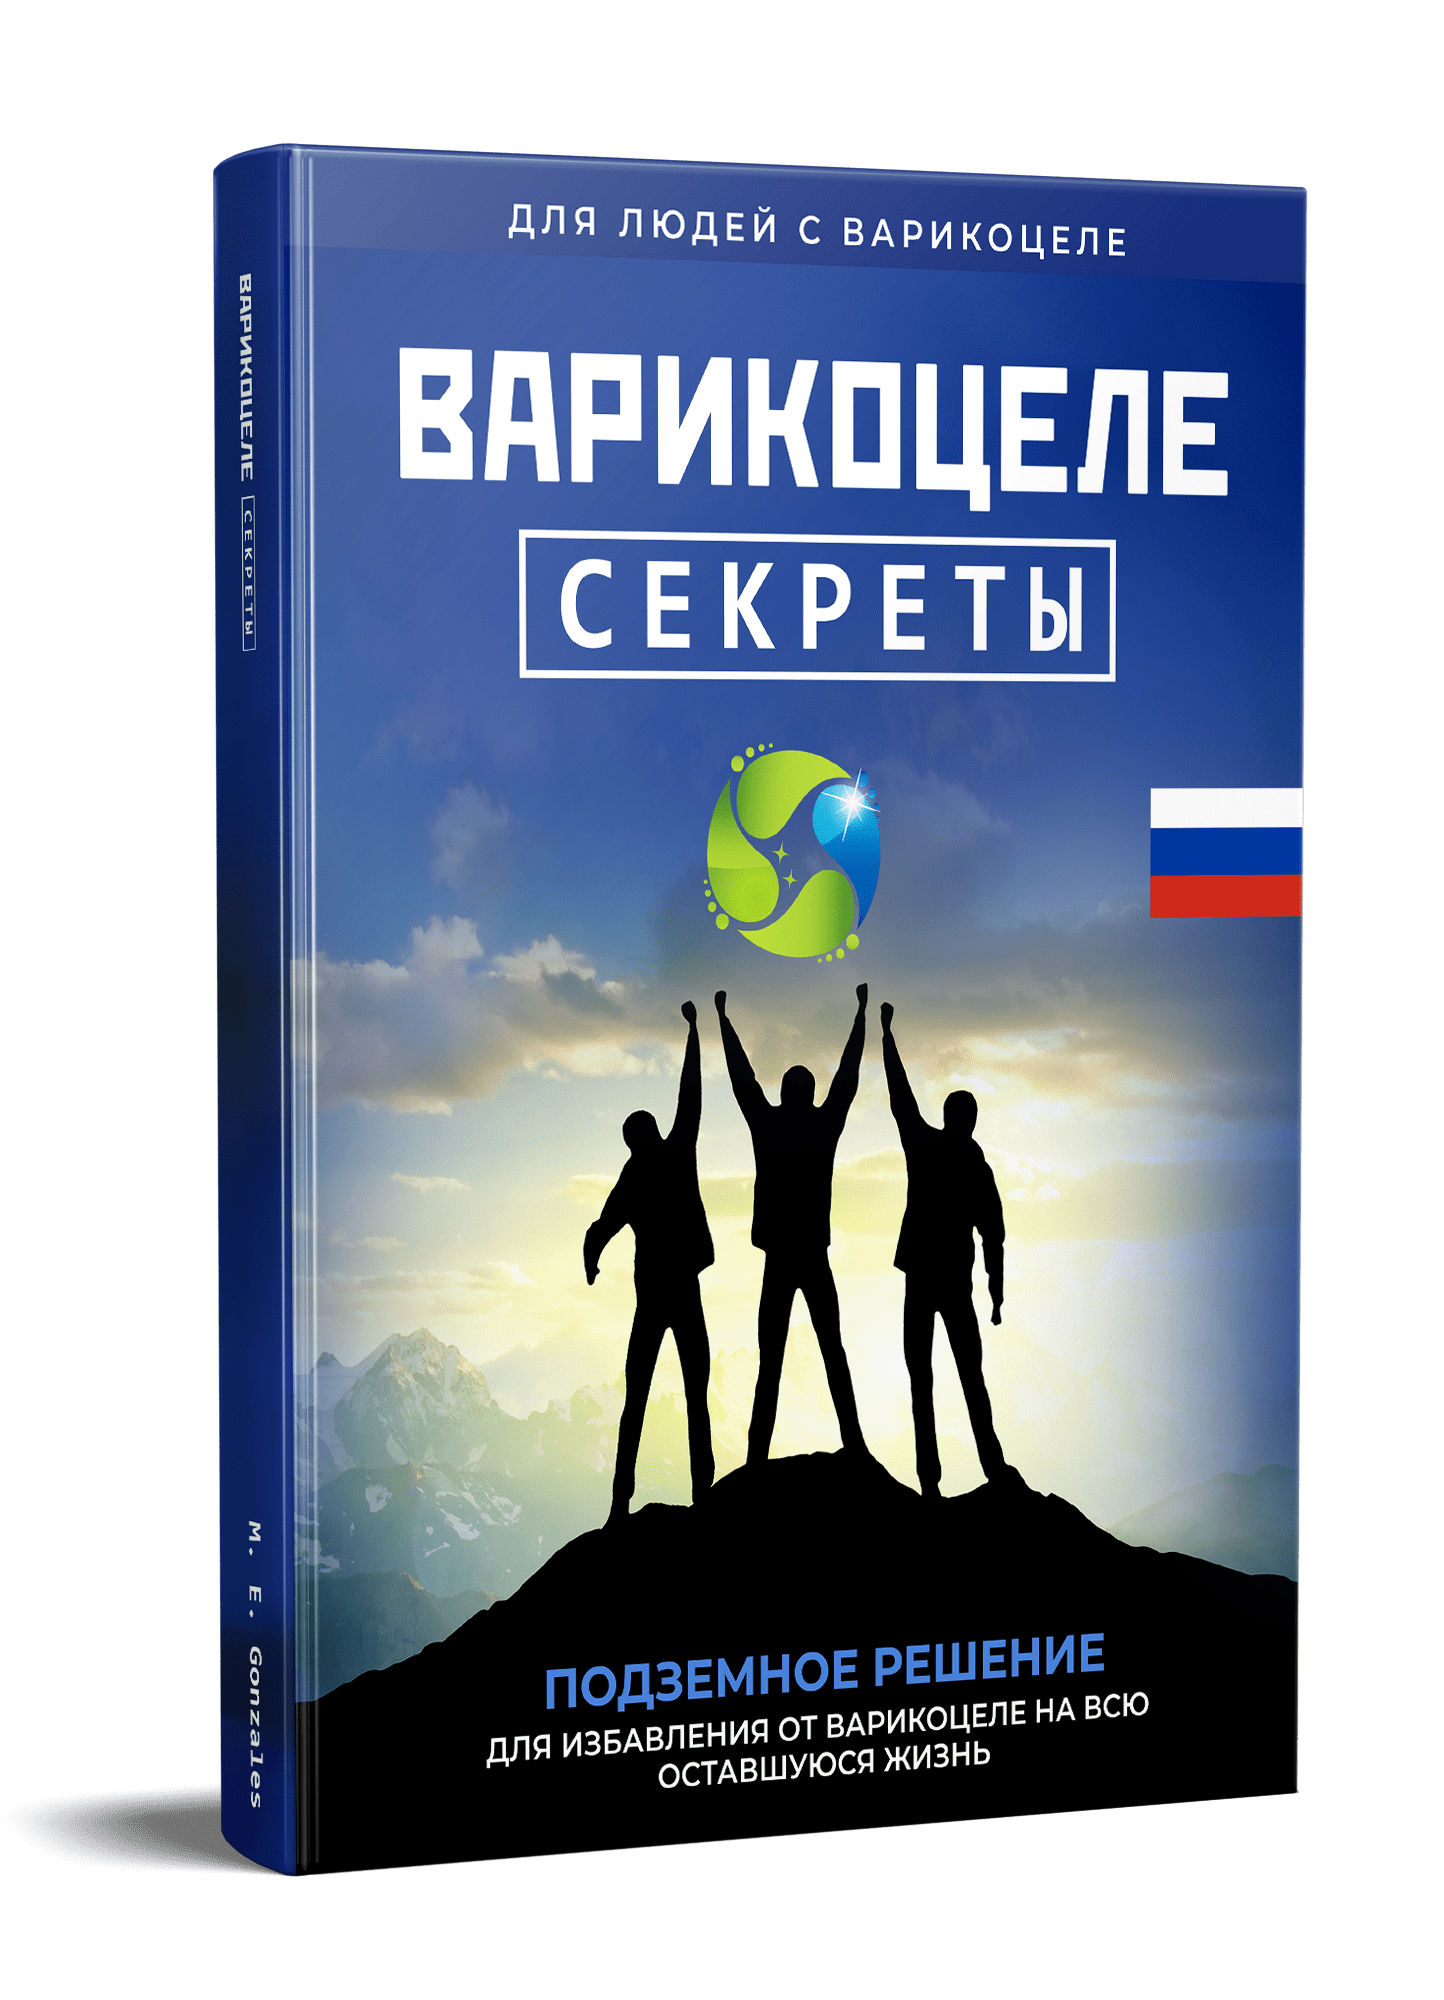 варикоцеле секреты Libro electrónico en ruso